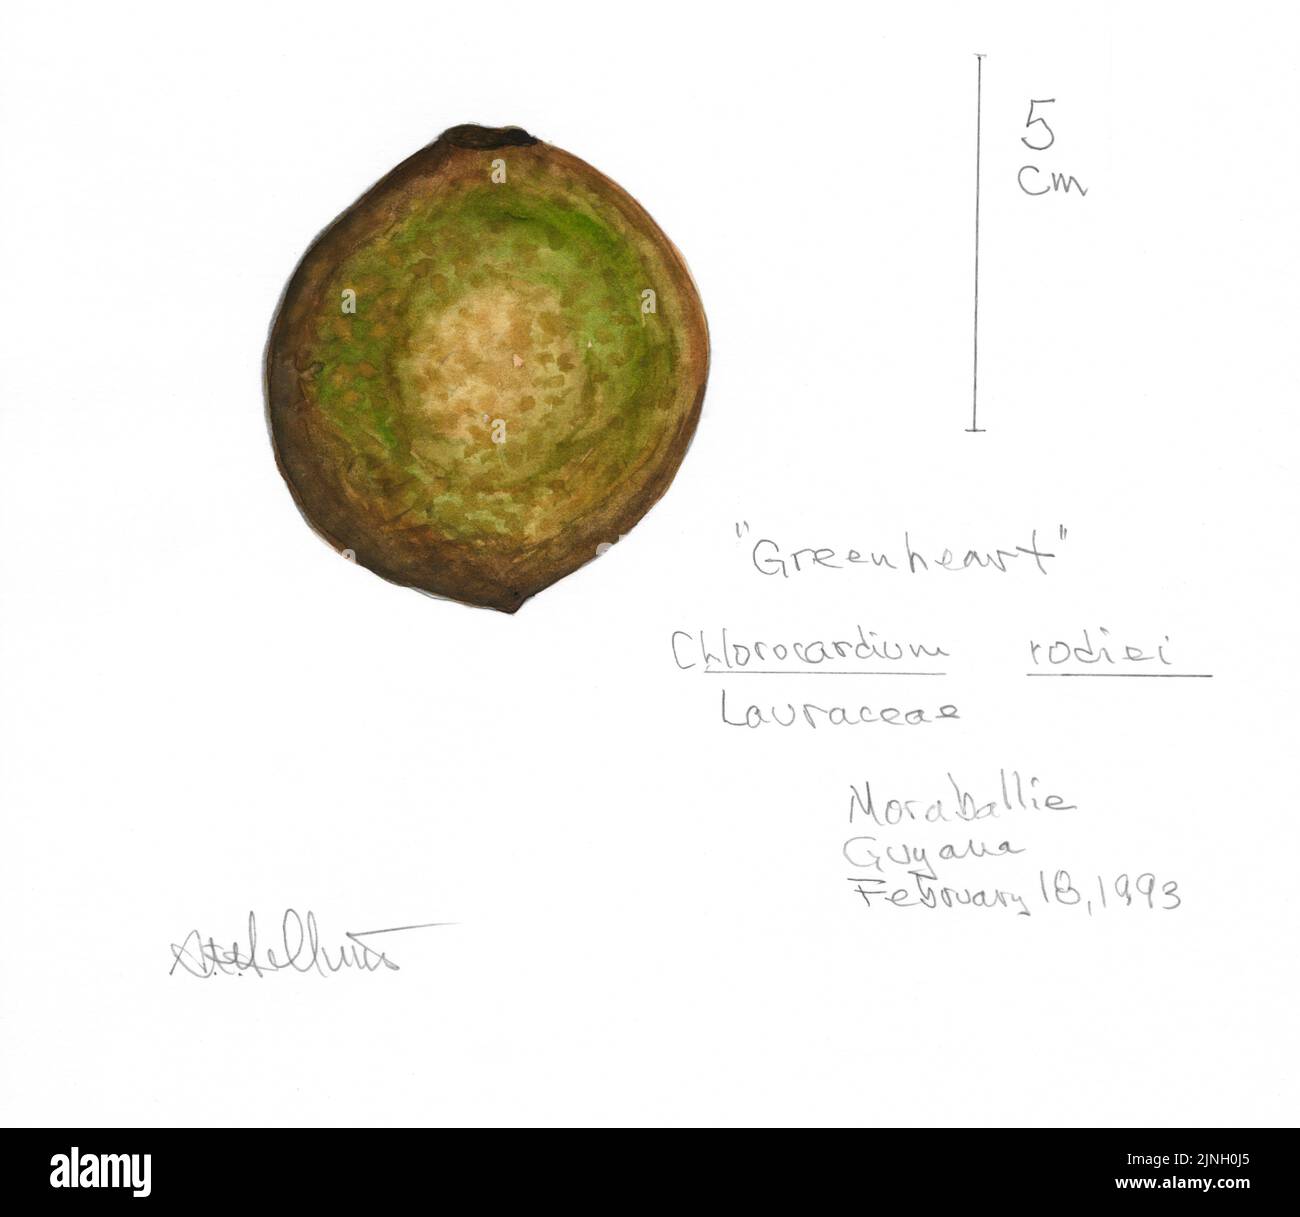 'GreenHeart' Chlorocardium rodiei (Lauraceae) gemalt von A. Kåre Hellum in Moraballie, Guyana, 18. Februar 1993 Stockfoto